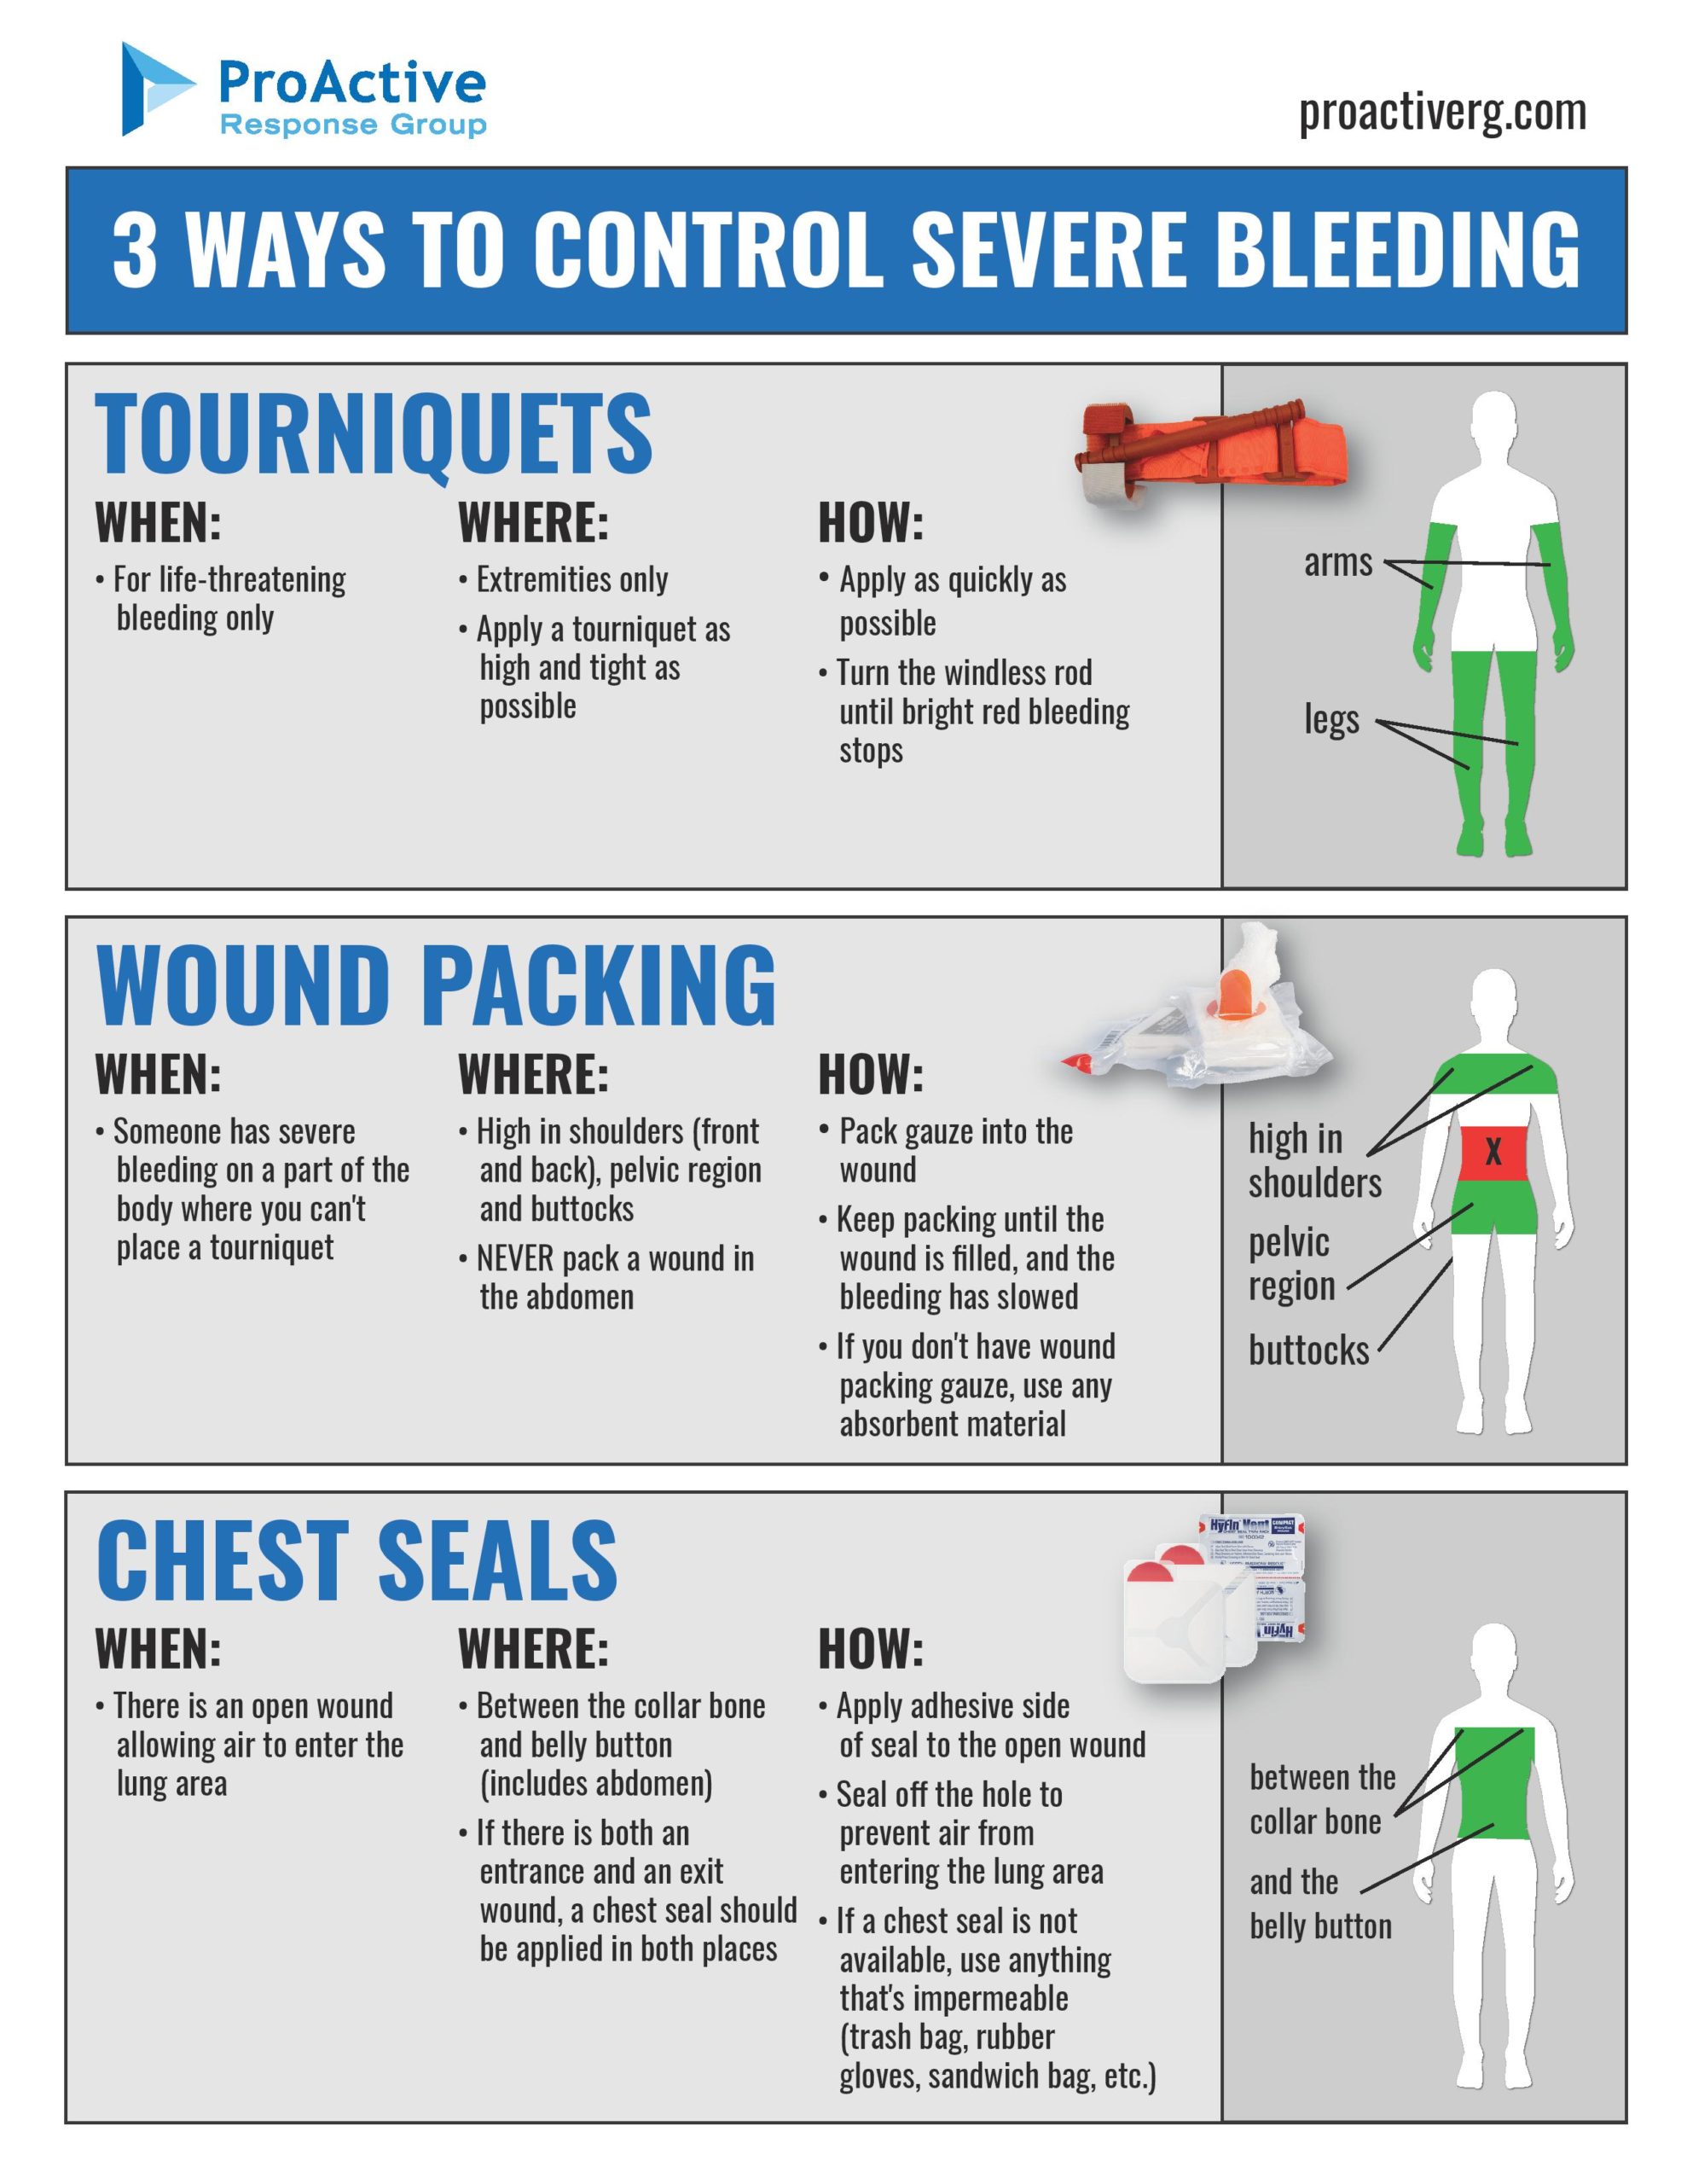 signs of abdominal bleeding from trauma